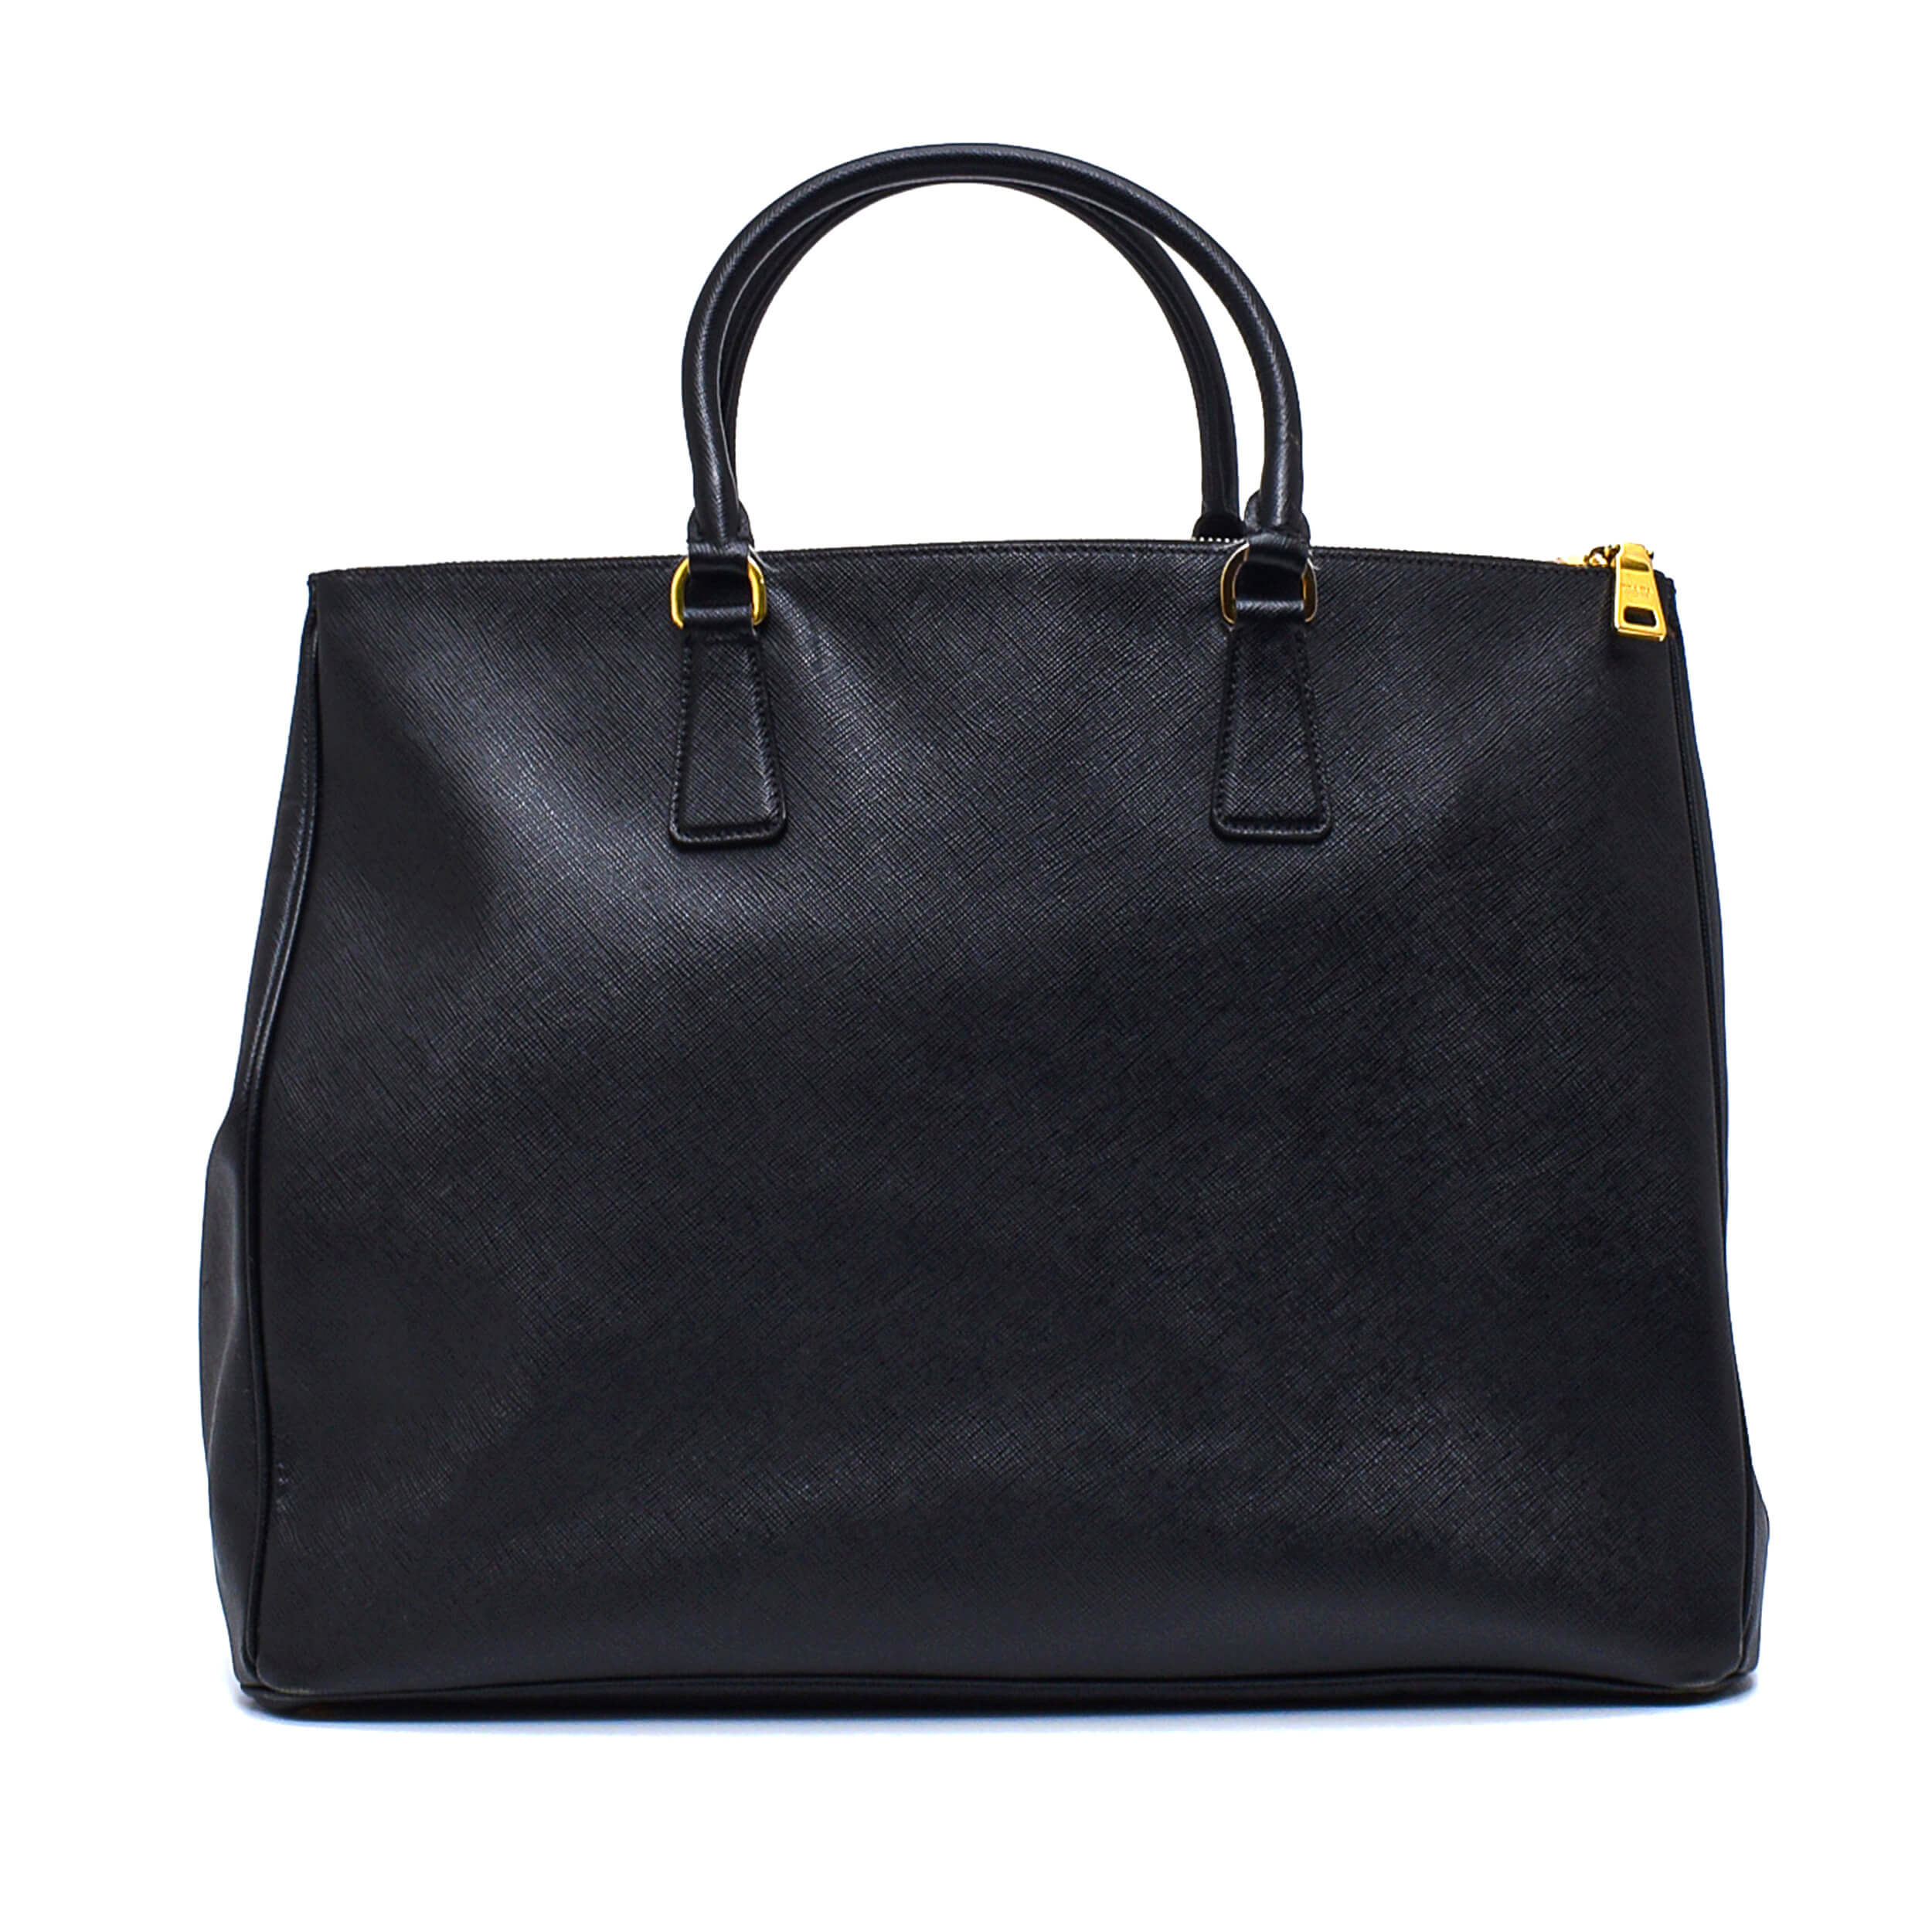 Prada - Black Saffiano Leather Large Double Zip Bag